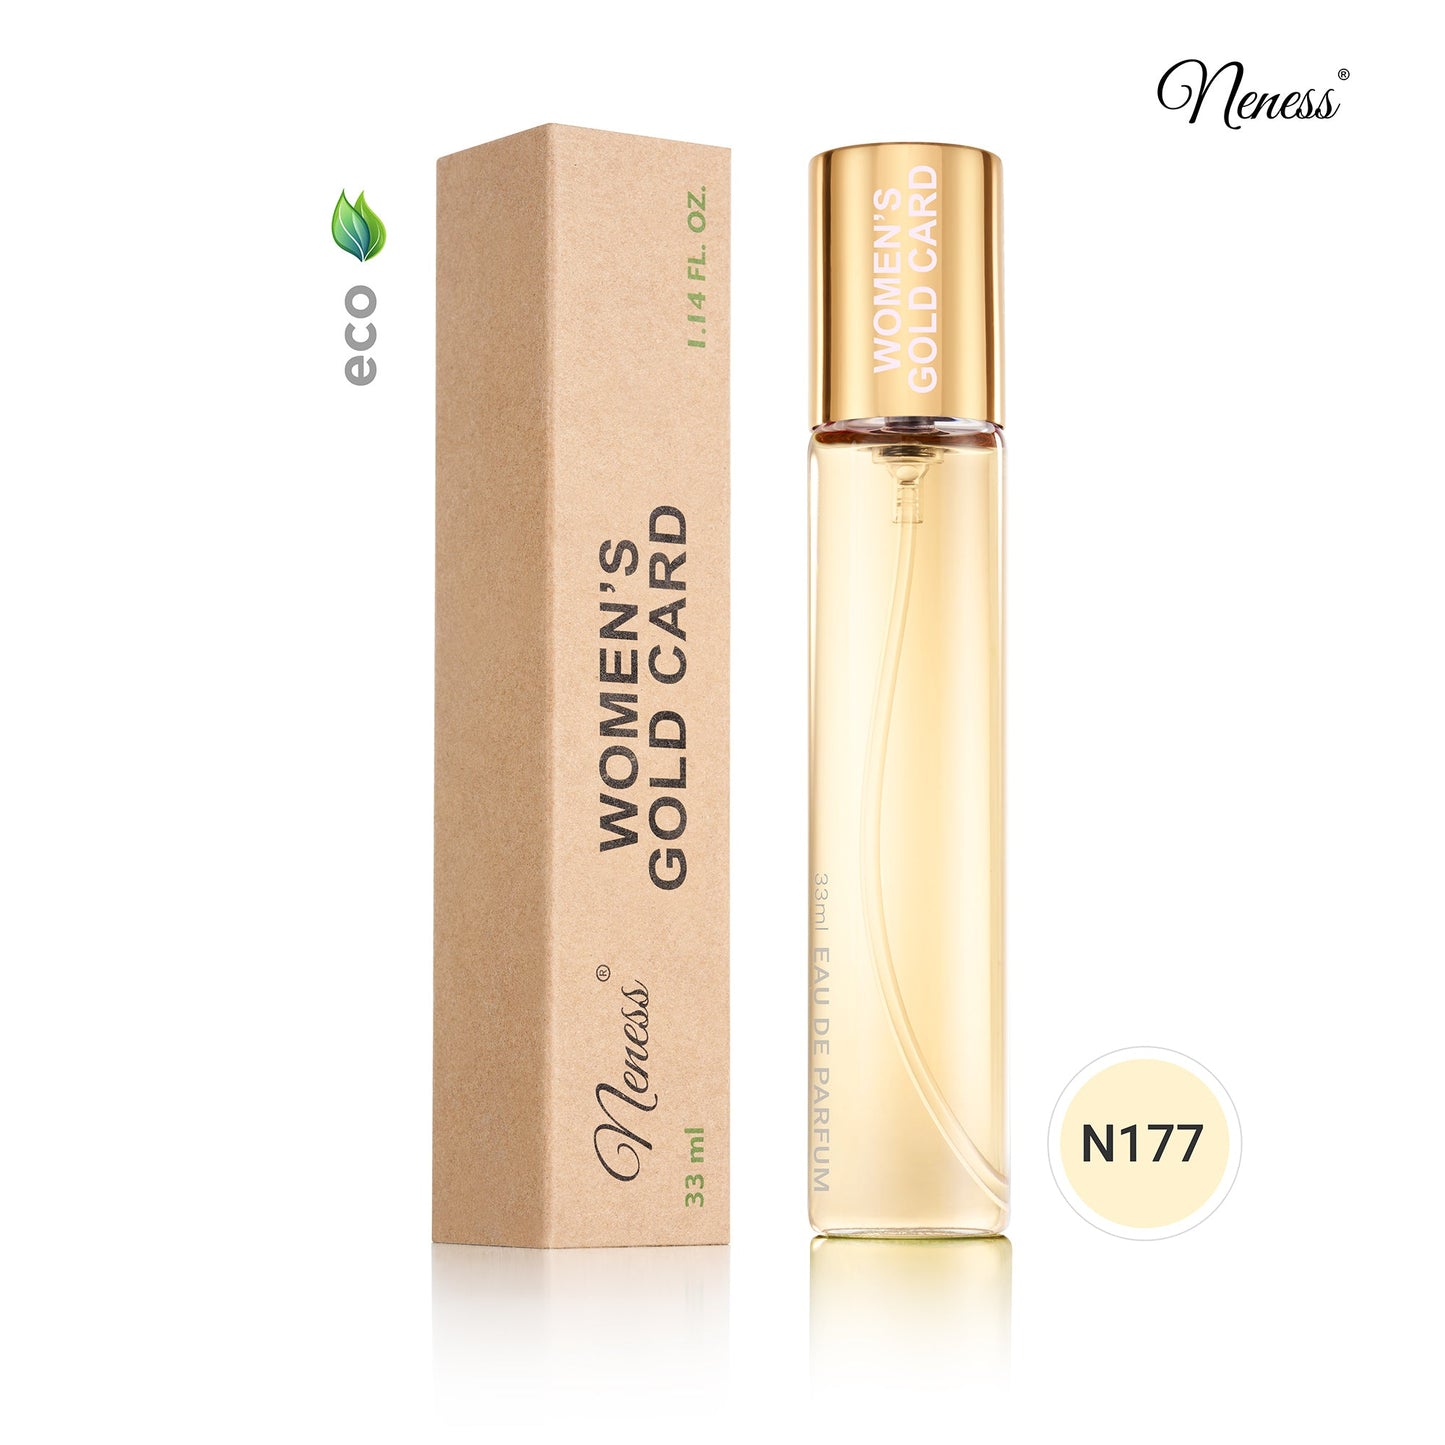 N177. Neness Women's Gold Card - 33 ml - Perfume For Women